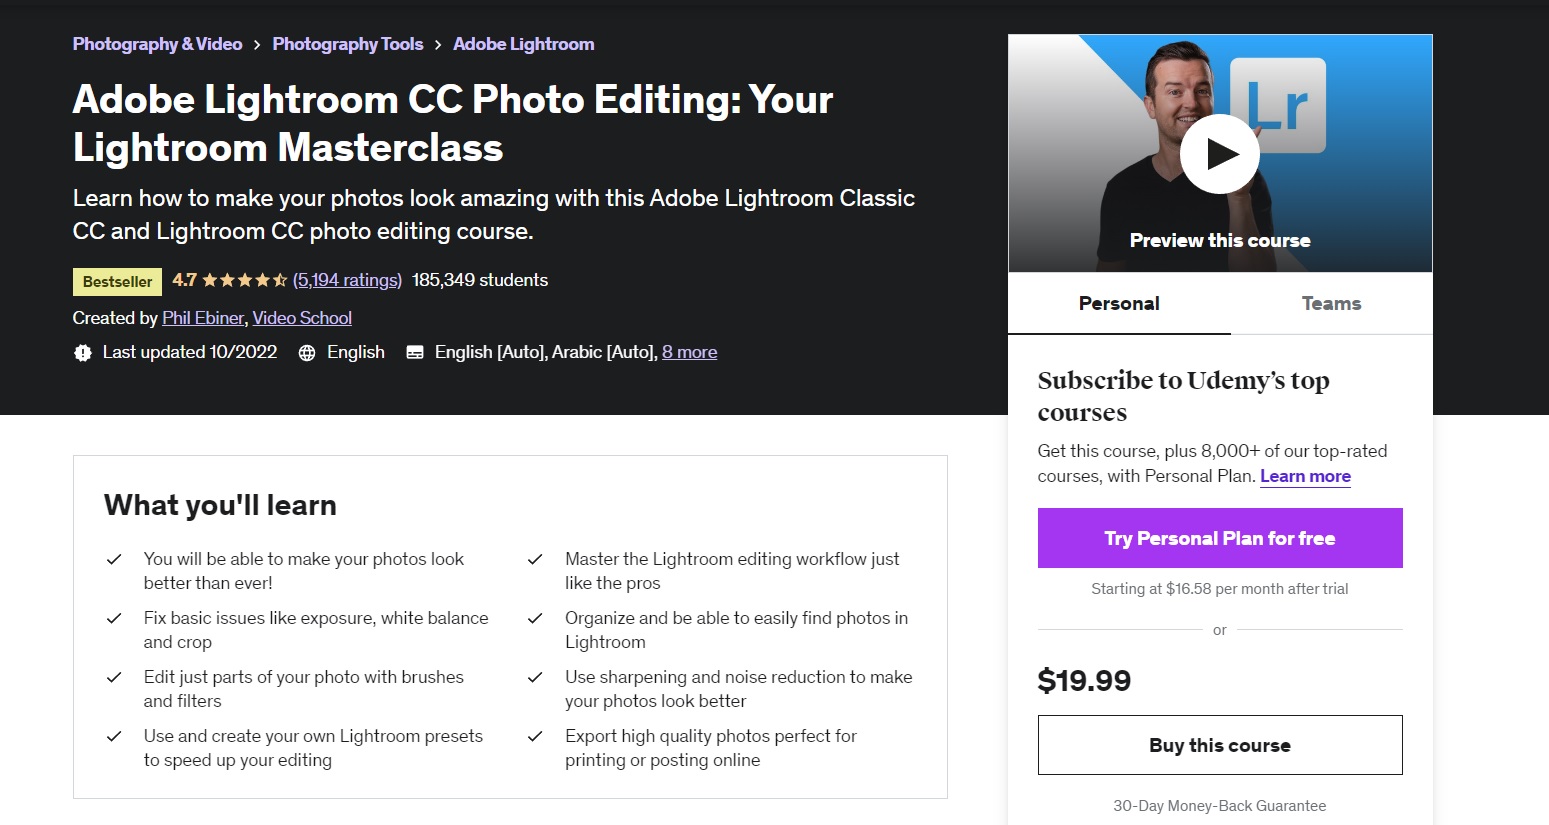 Adobe Lightroom CC Photo Editing